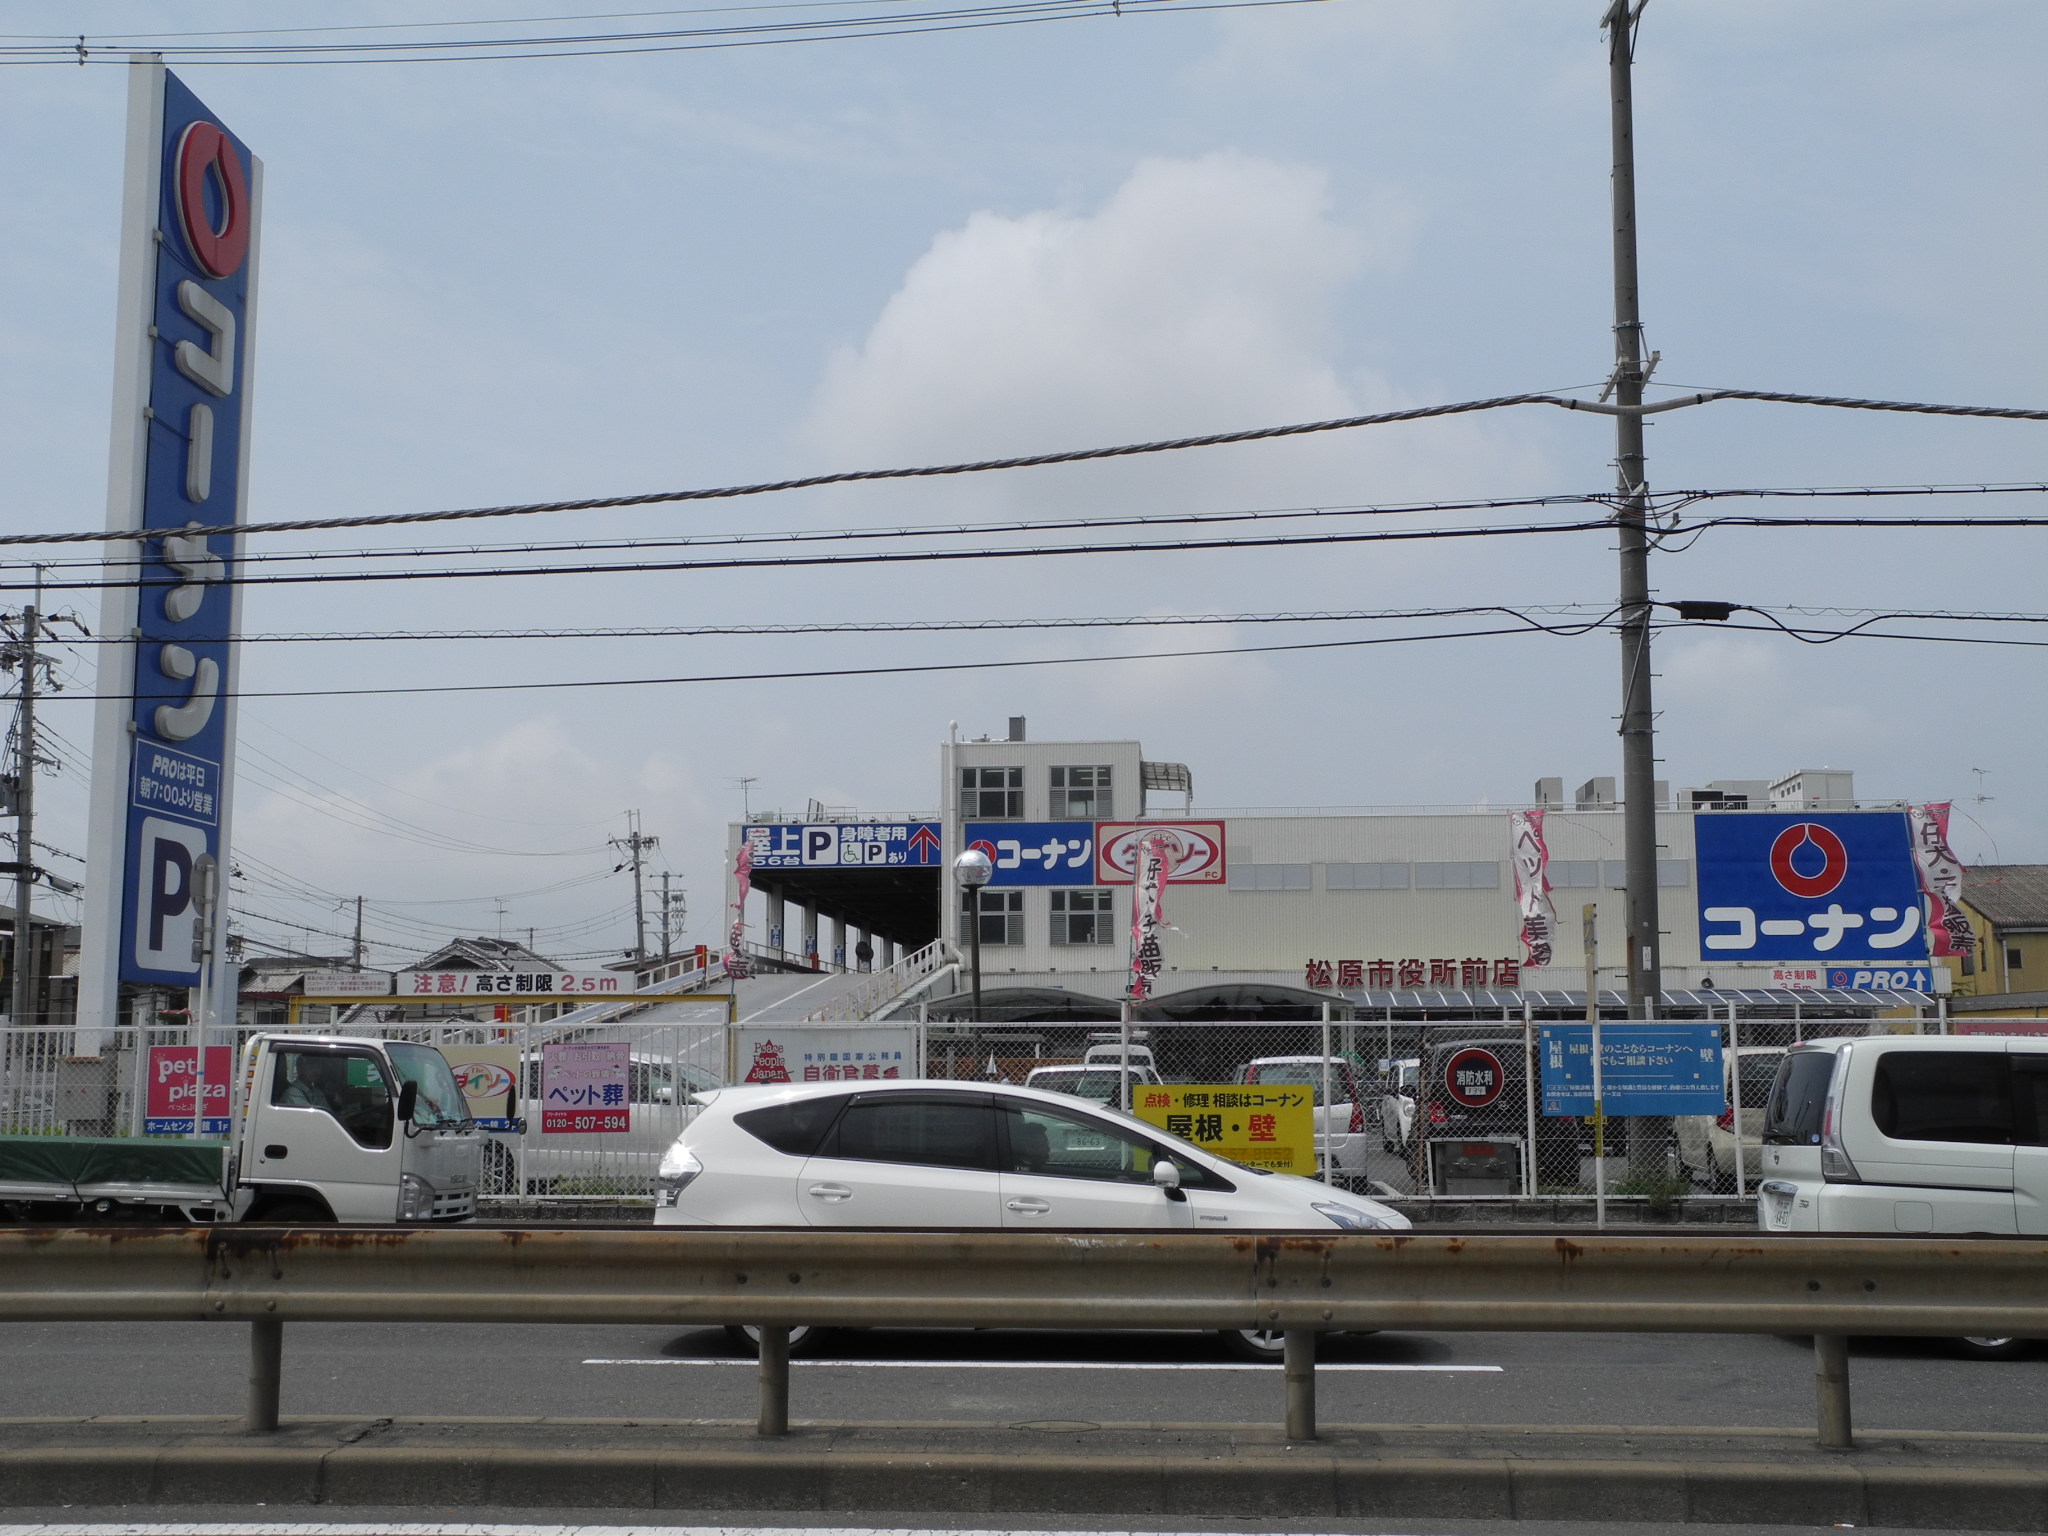 Home center. 1496m to the home center Konan Matsubara City Hall store (hardware store)